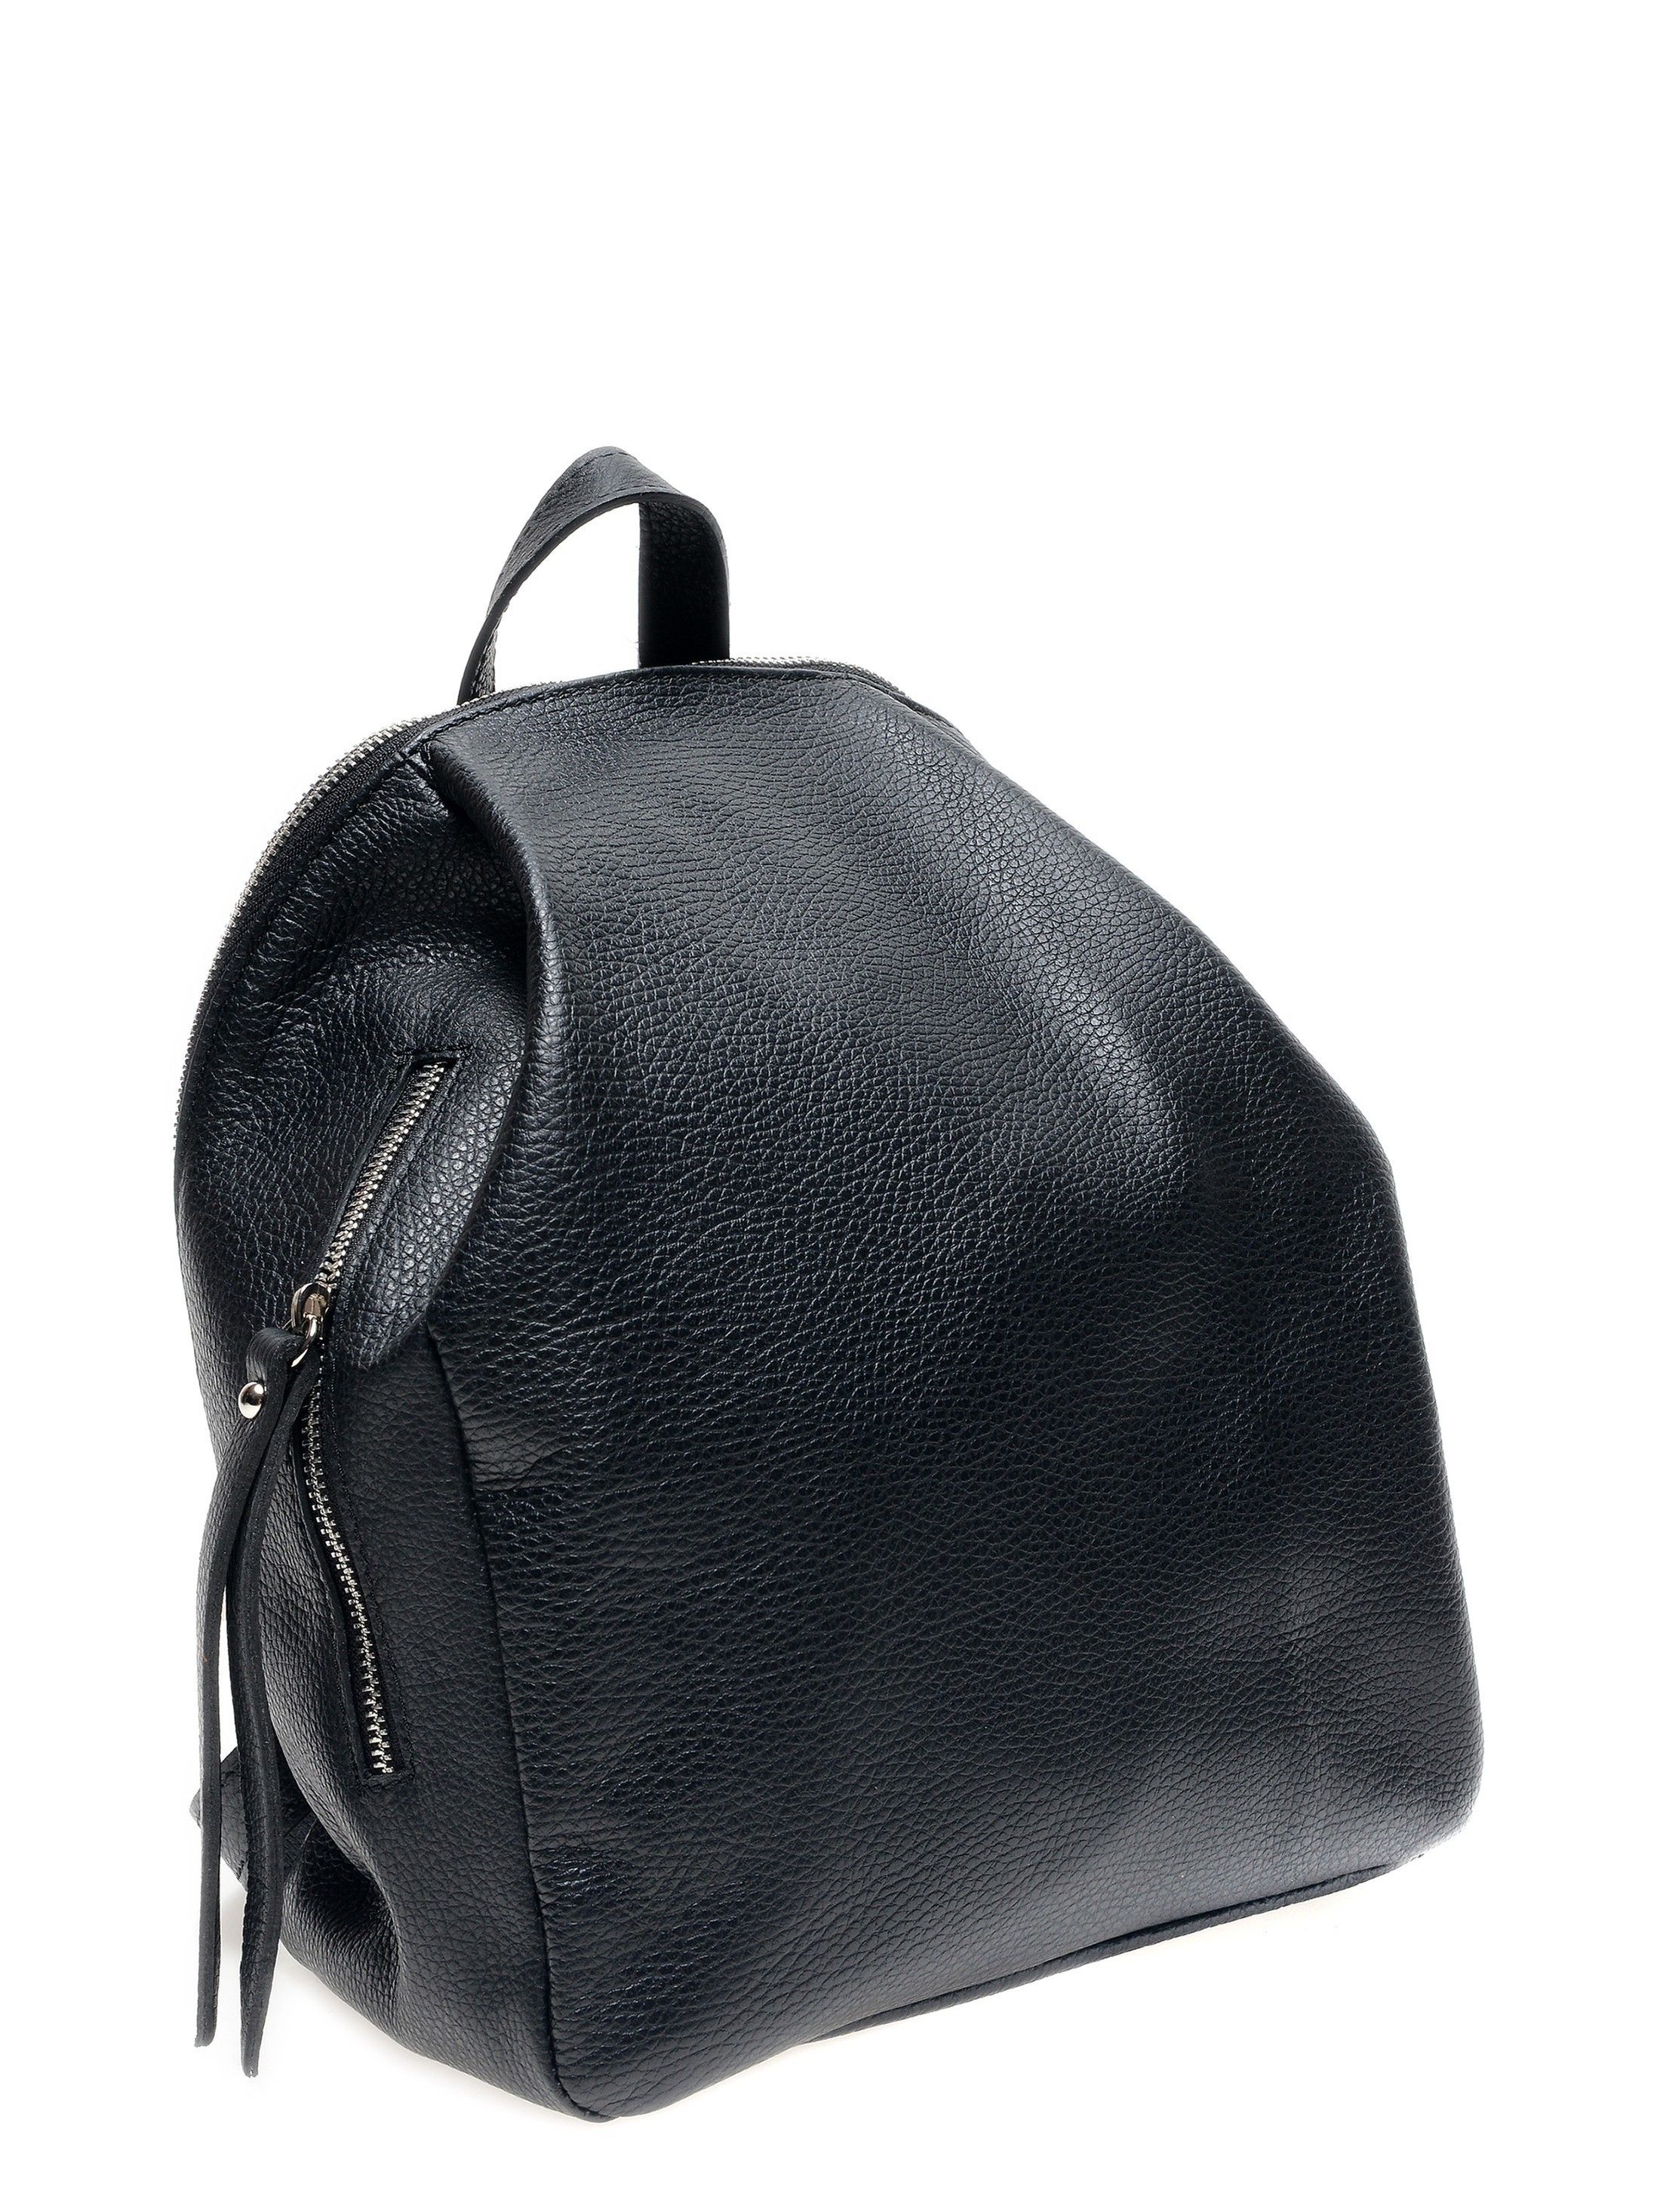 Backpack
100% cow leather
Top zip closure
Front zip pockets
Interior zip pocket and phone compartment
Back zip pocket
Dimensions (L): 30x31x13 cm
Handle: 20 cm
Shoulder strap: 80x2 cm